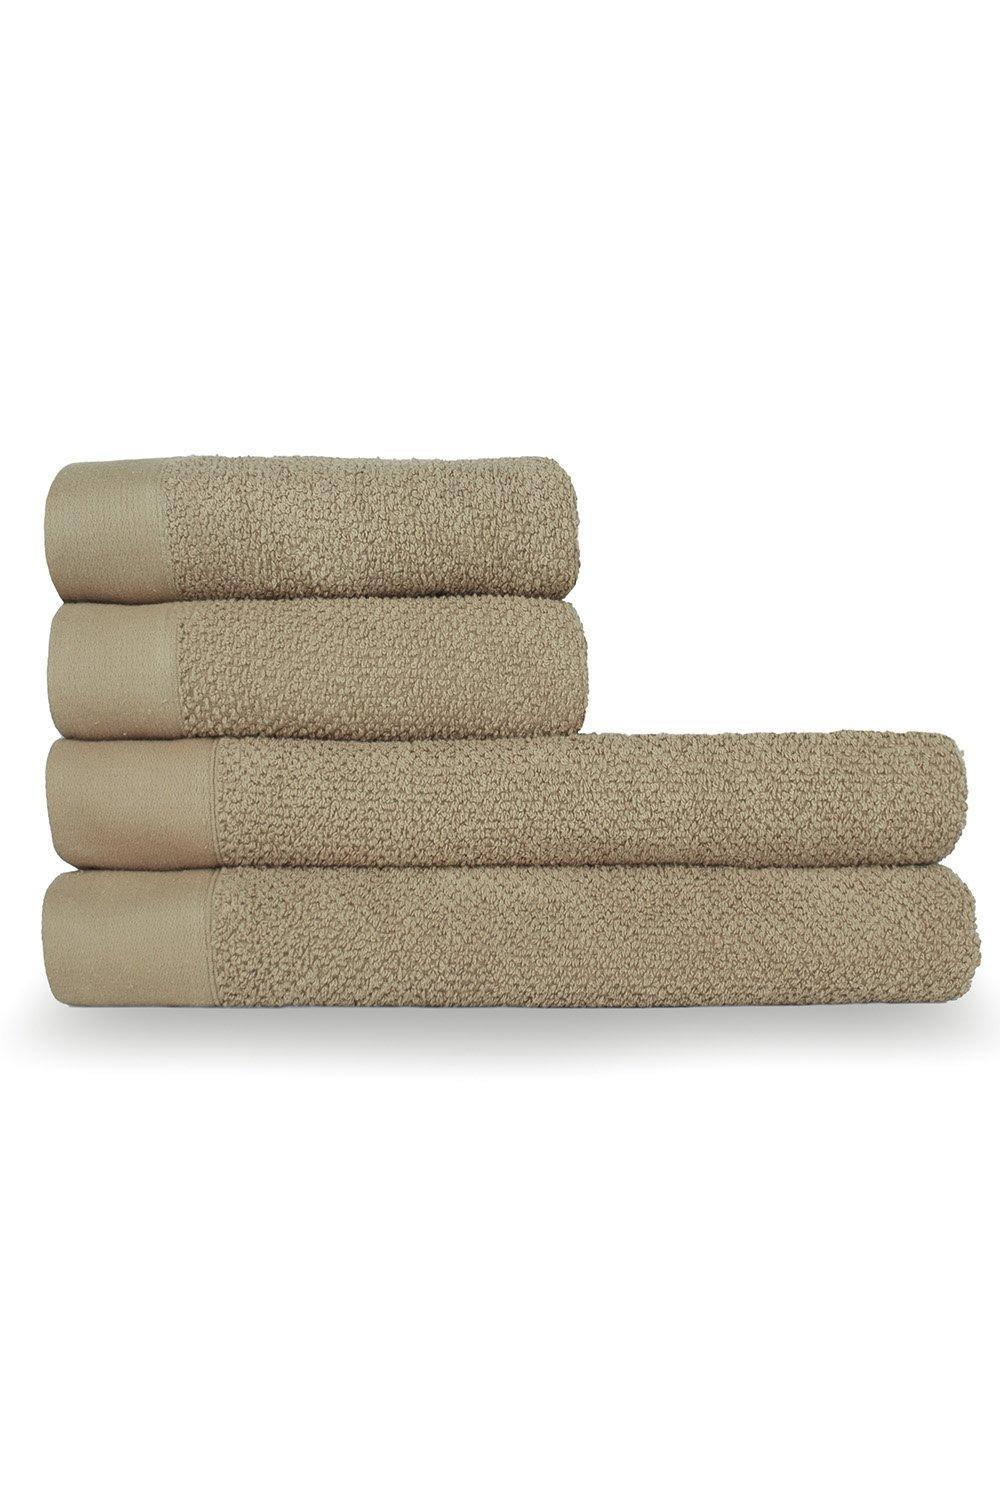 Textured Weave Oxford Panel Cotton 4-Piece Hand/Bath Sheet Towel Bale